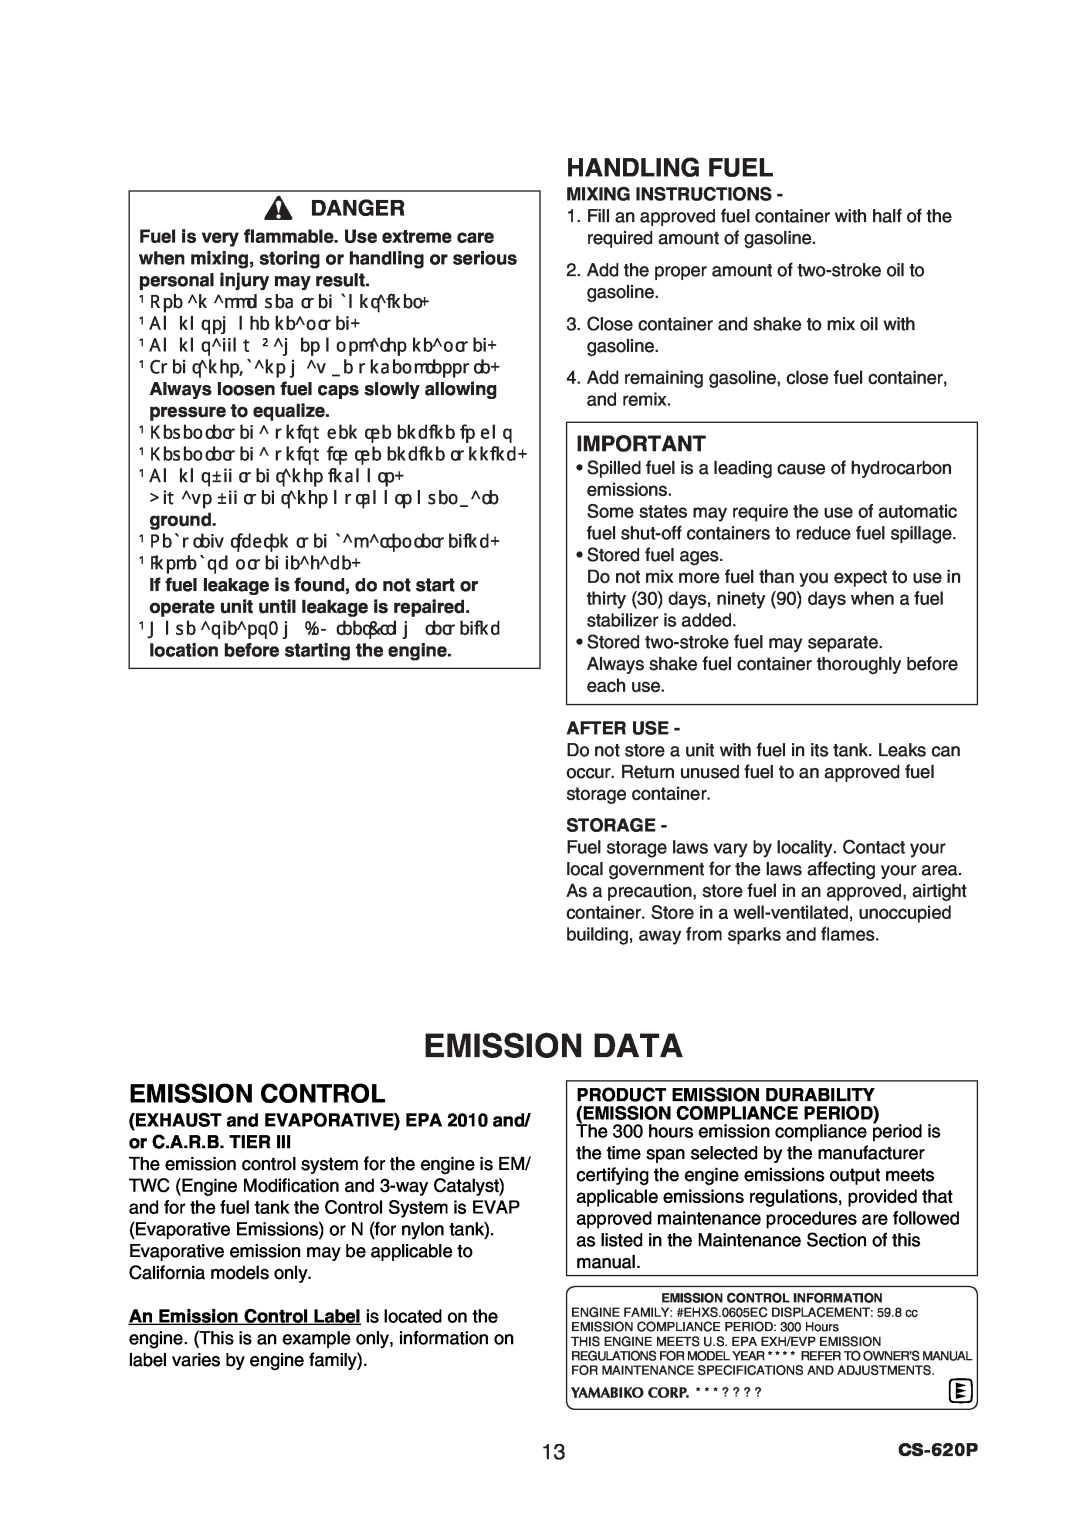 Echo CS-620P instruction manual Emission Data, Handling Fuel, Emission Control, Danger 